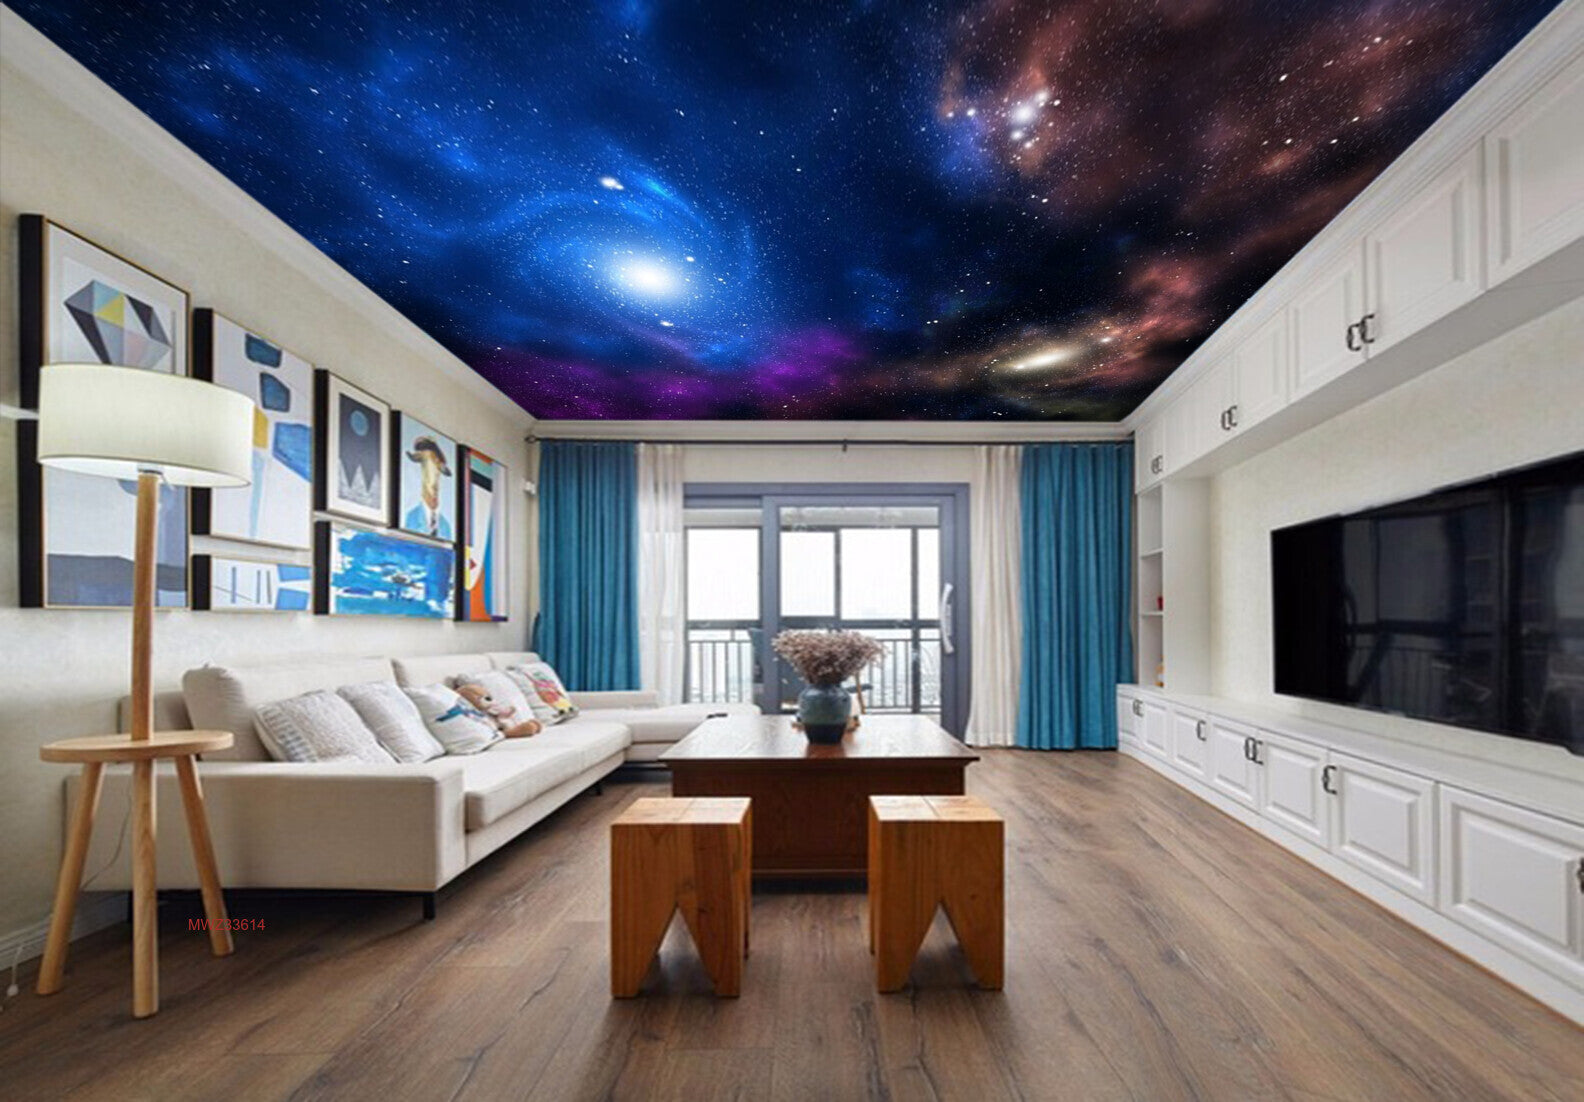 Avikalp MWZ3361 Blue Purple Red Galaxy HD Wallpaper for Ceiling